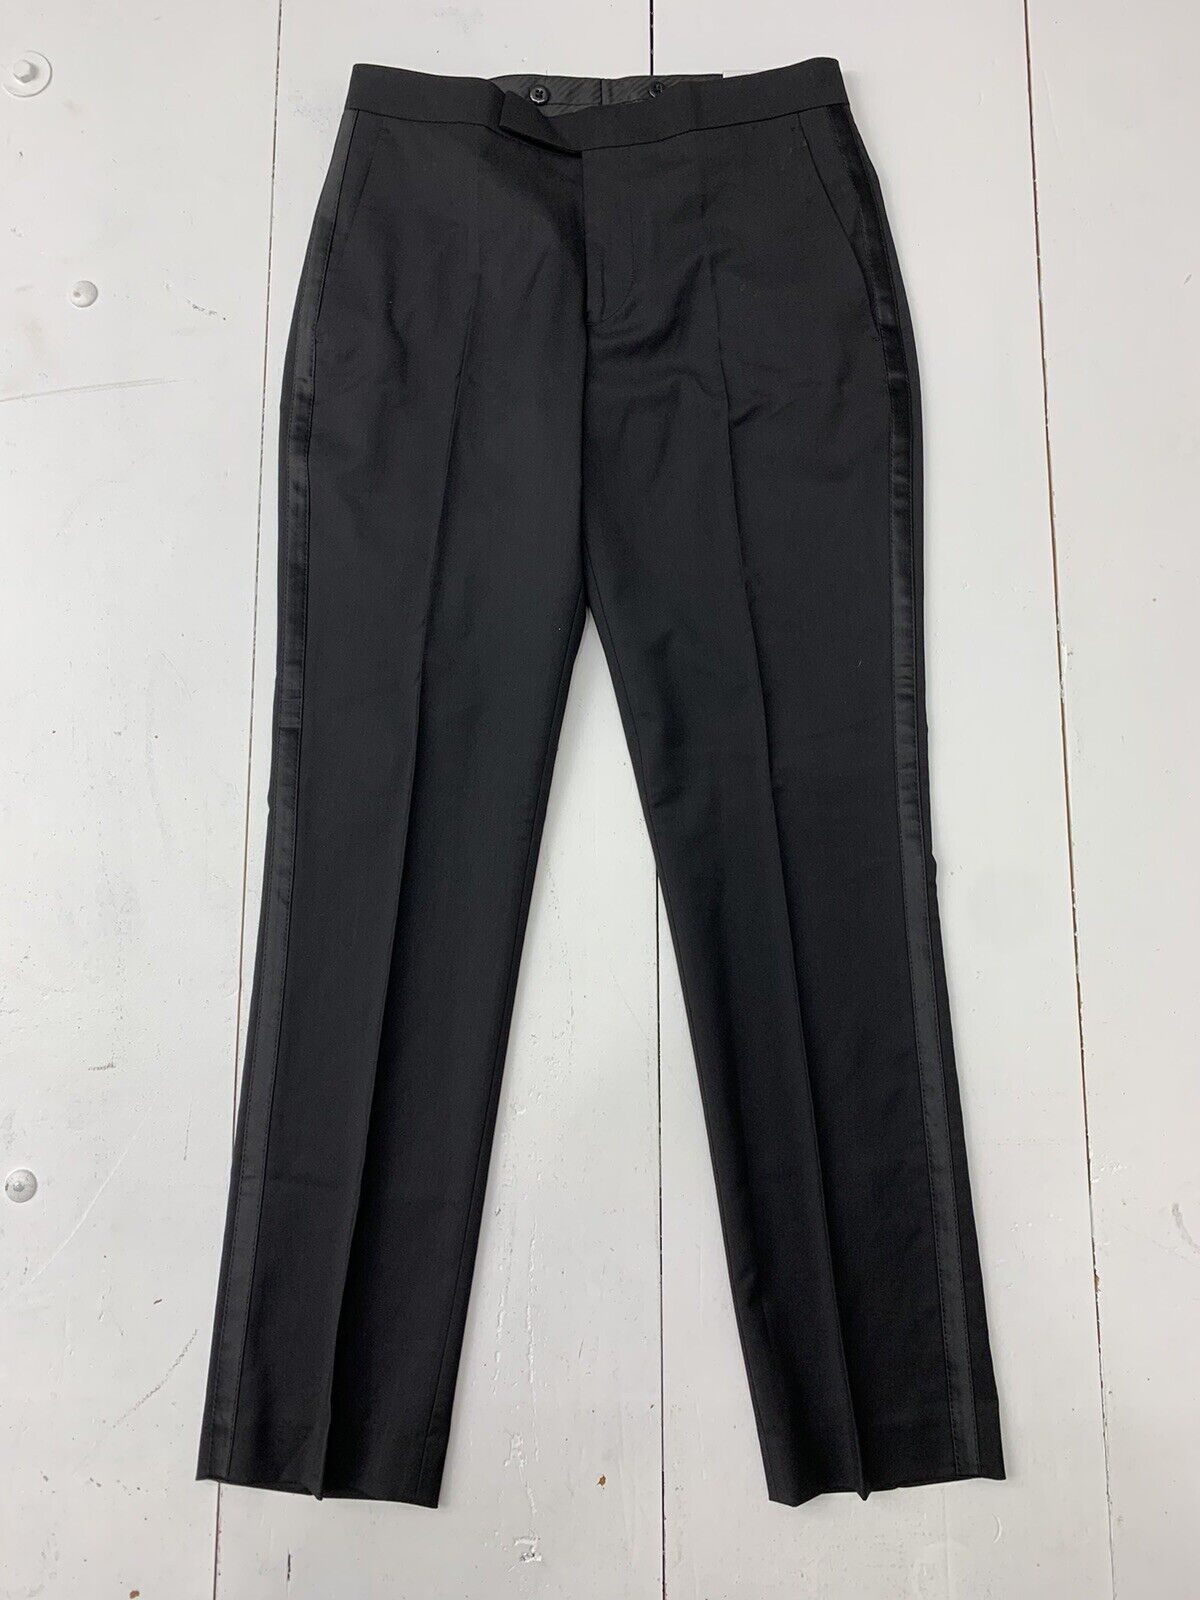 Carhartt Dungaree Work Pants, Black, Size 36x34 In B11-BLK 36 34 | Zoro